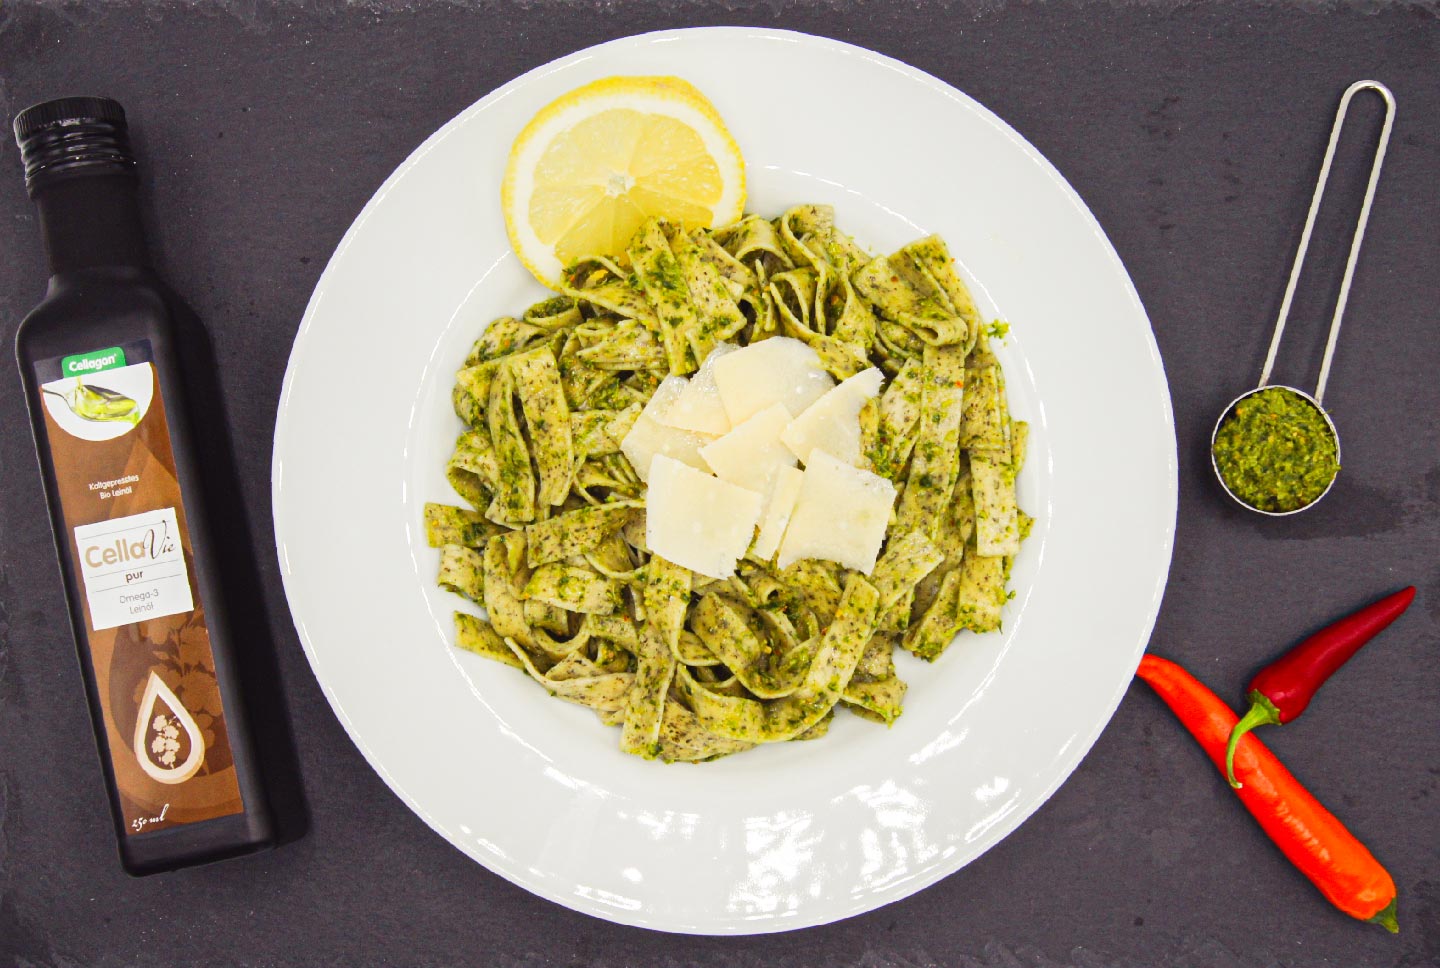 Pasta mit Grünkohl-Pesto und Cellagon CellaVie pur